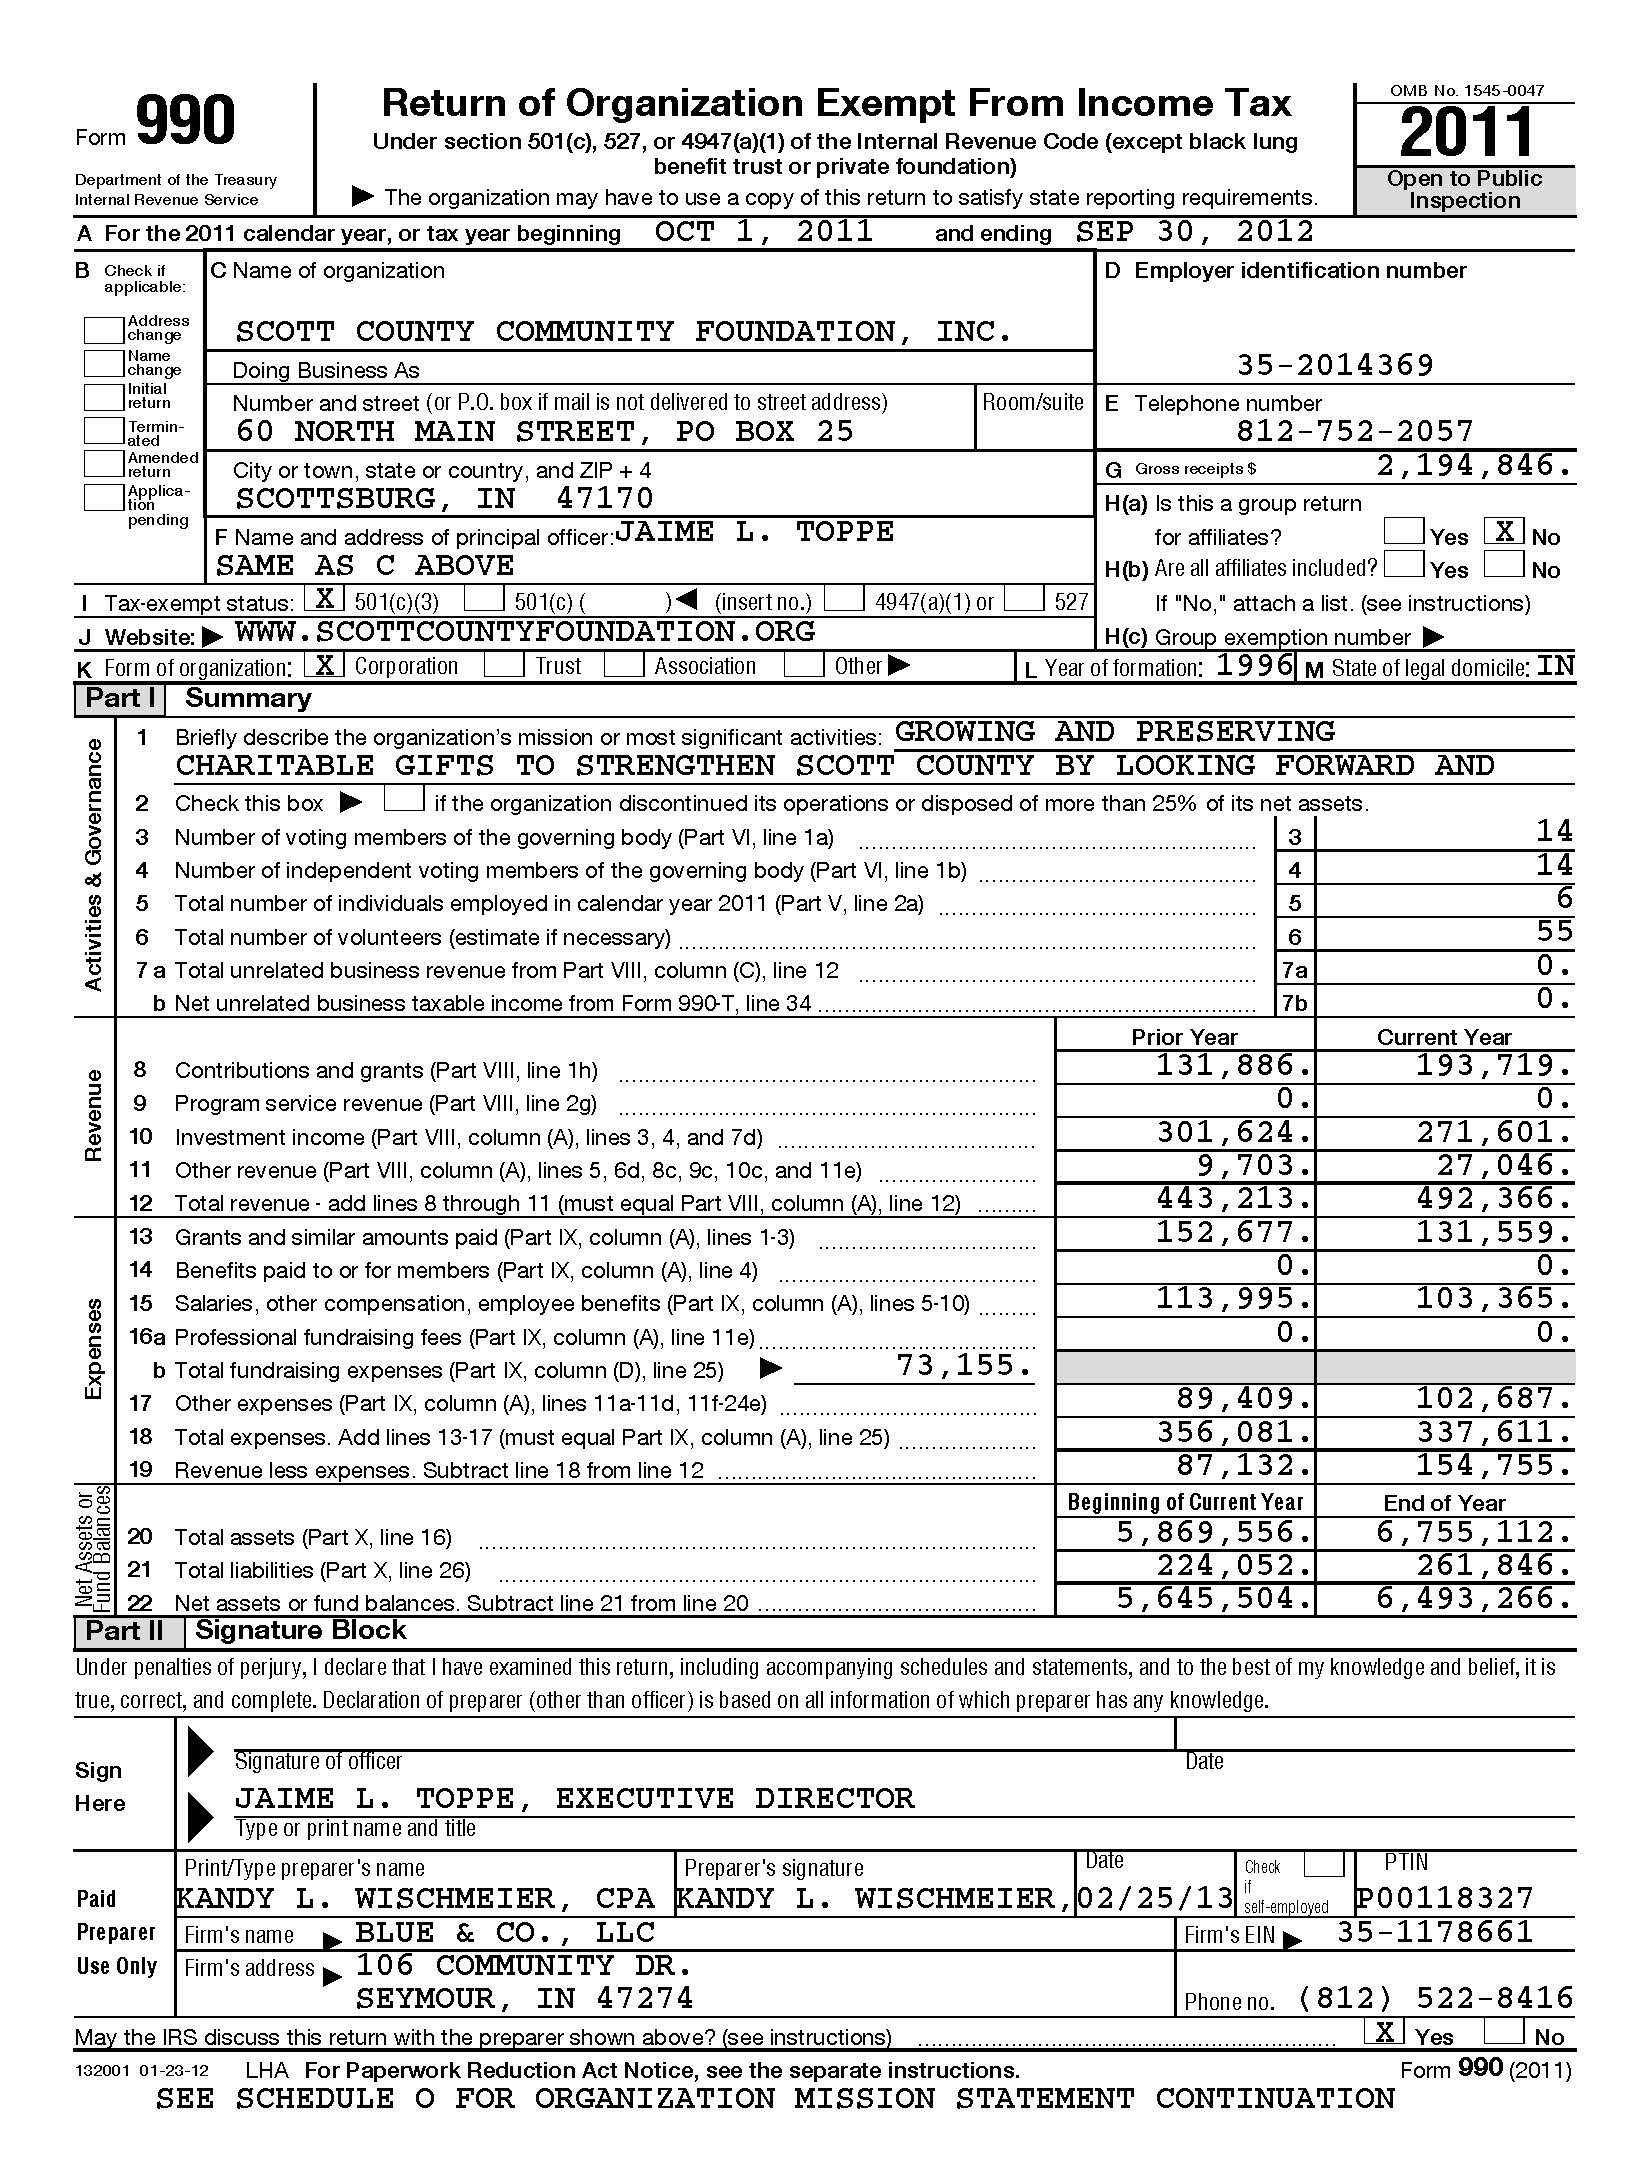 2011 IRS 990 Report